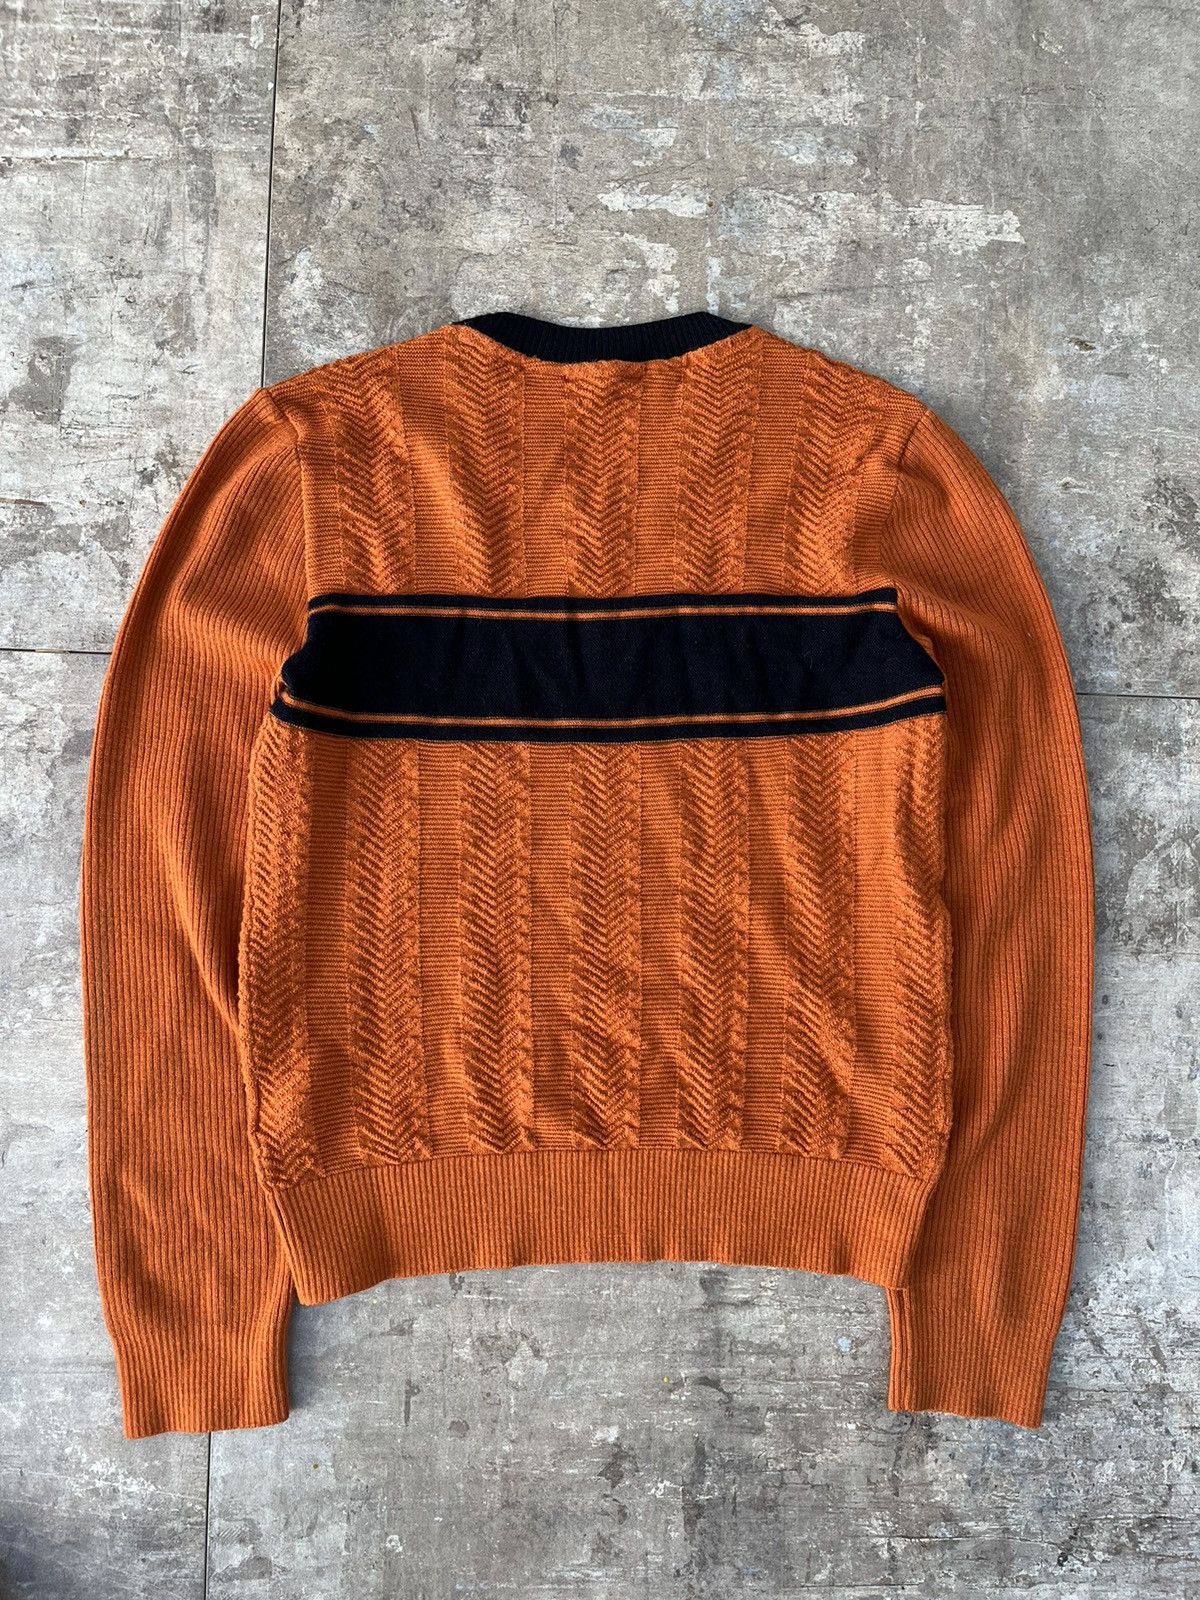 Adidas Adidas Wales Bonner Knit Sweater Size US M / EU 48-50 / 2 - 2 Preview